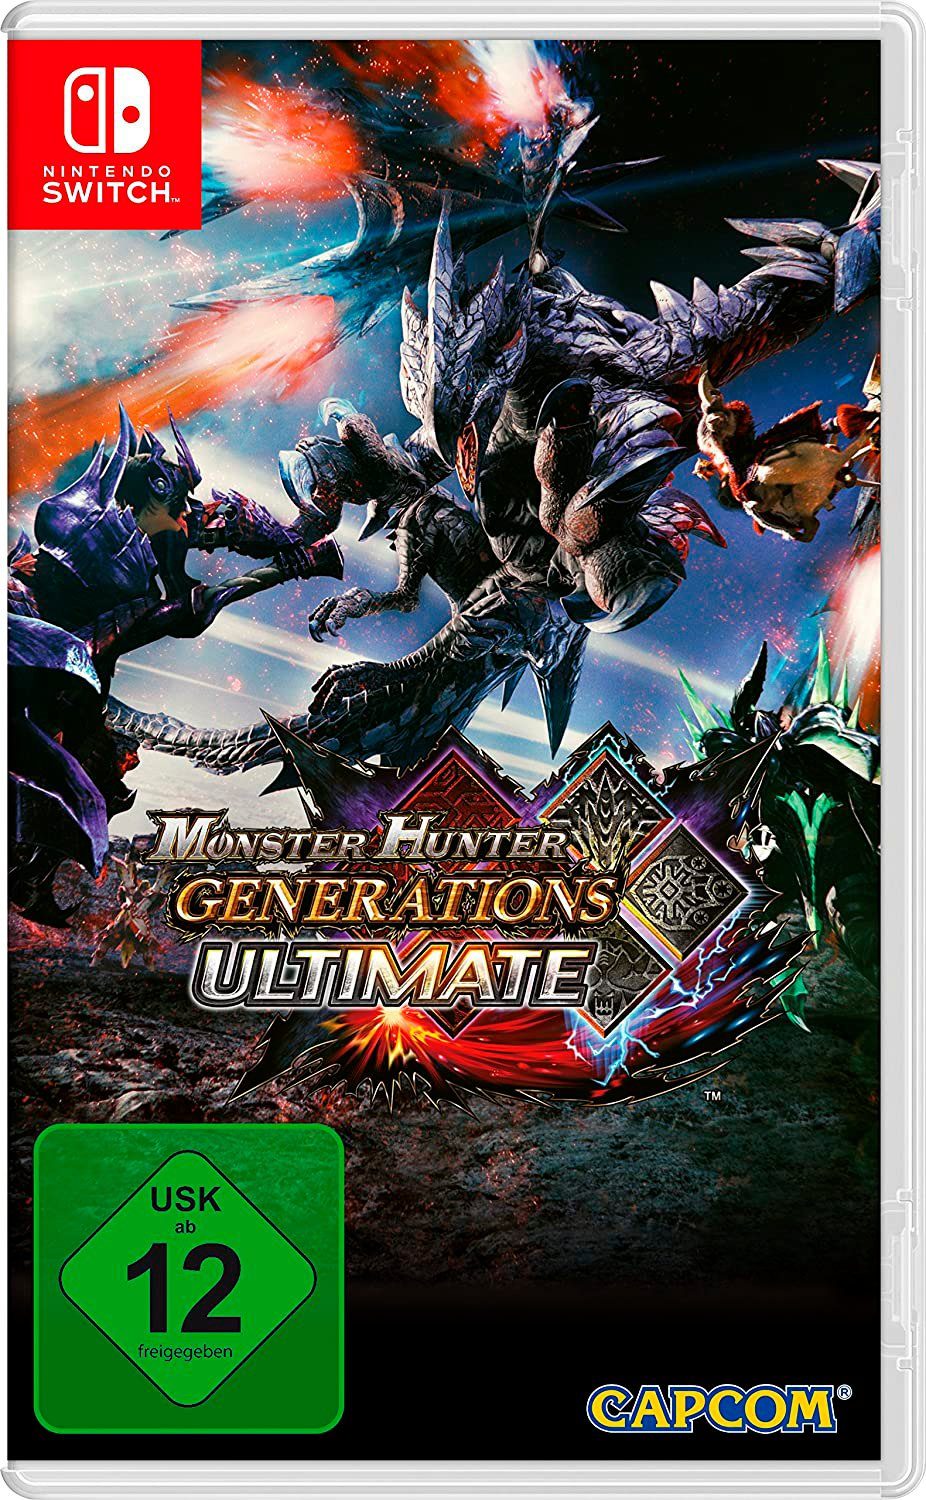 Capcom Monster Hunter Switch Ultimate Generations Nintendo